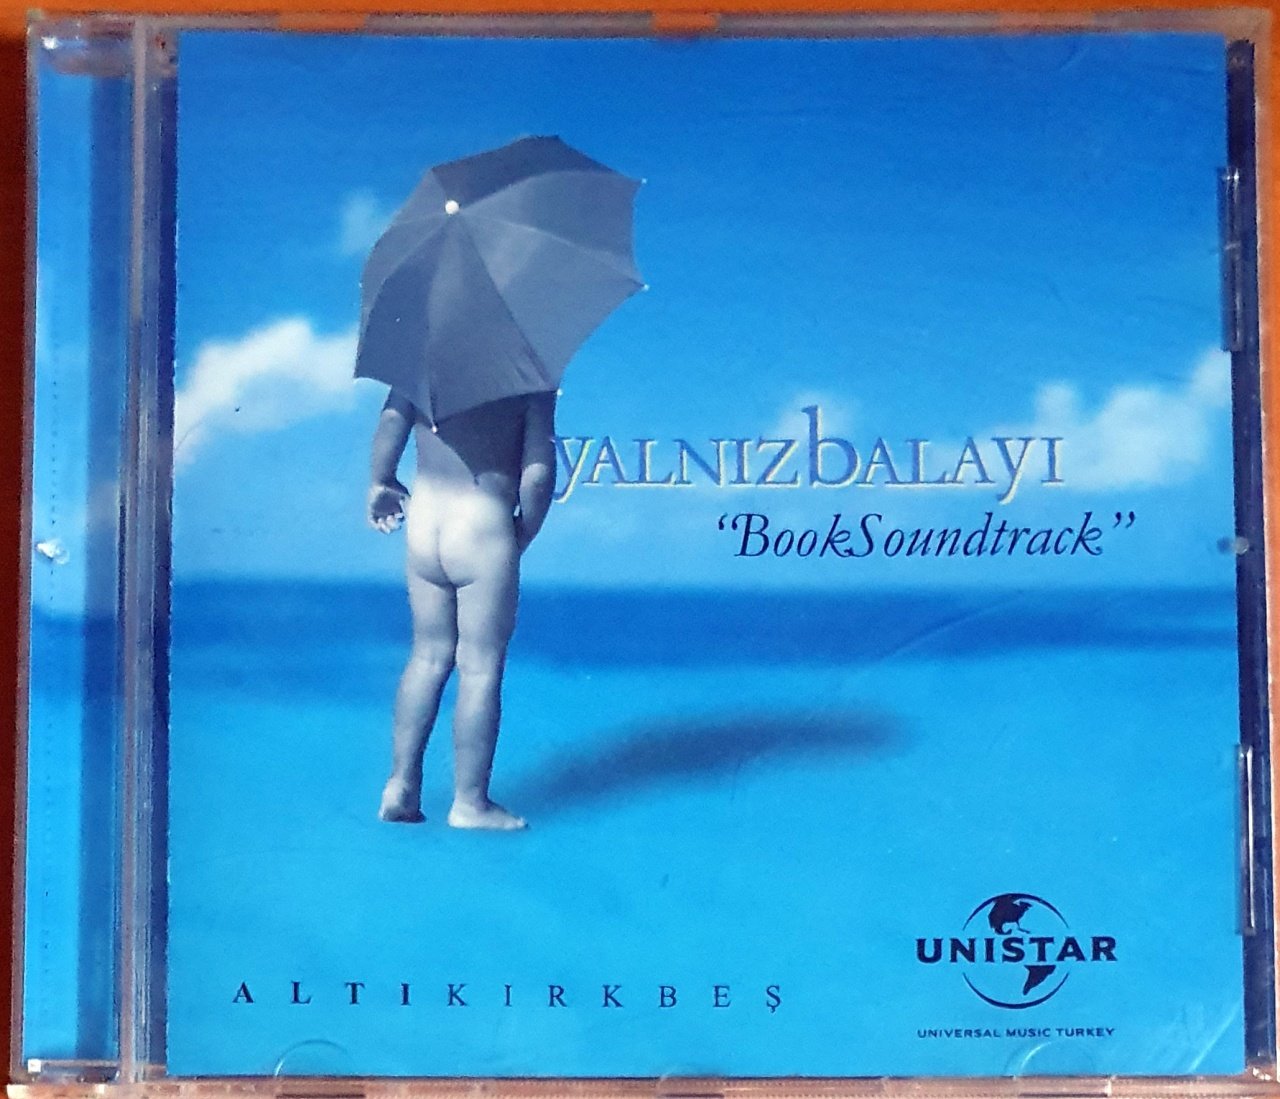 YALNIZ BALAYI BOOK SOUNDTRACK / FREE, DAVID BOWIE, THE JAM, ABC, THIN LIZZY, DEEP PURPLE, JOE JACKSON (2000) - CD 2.EL